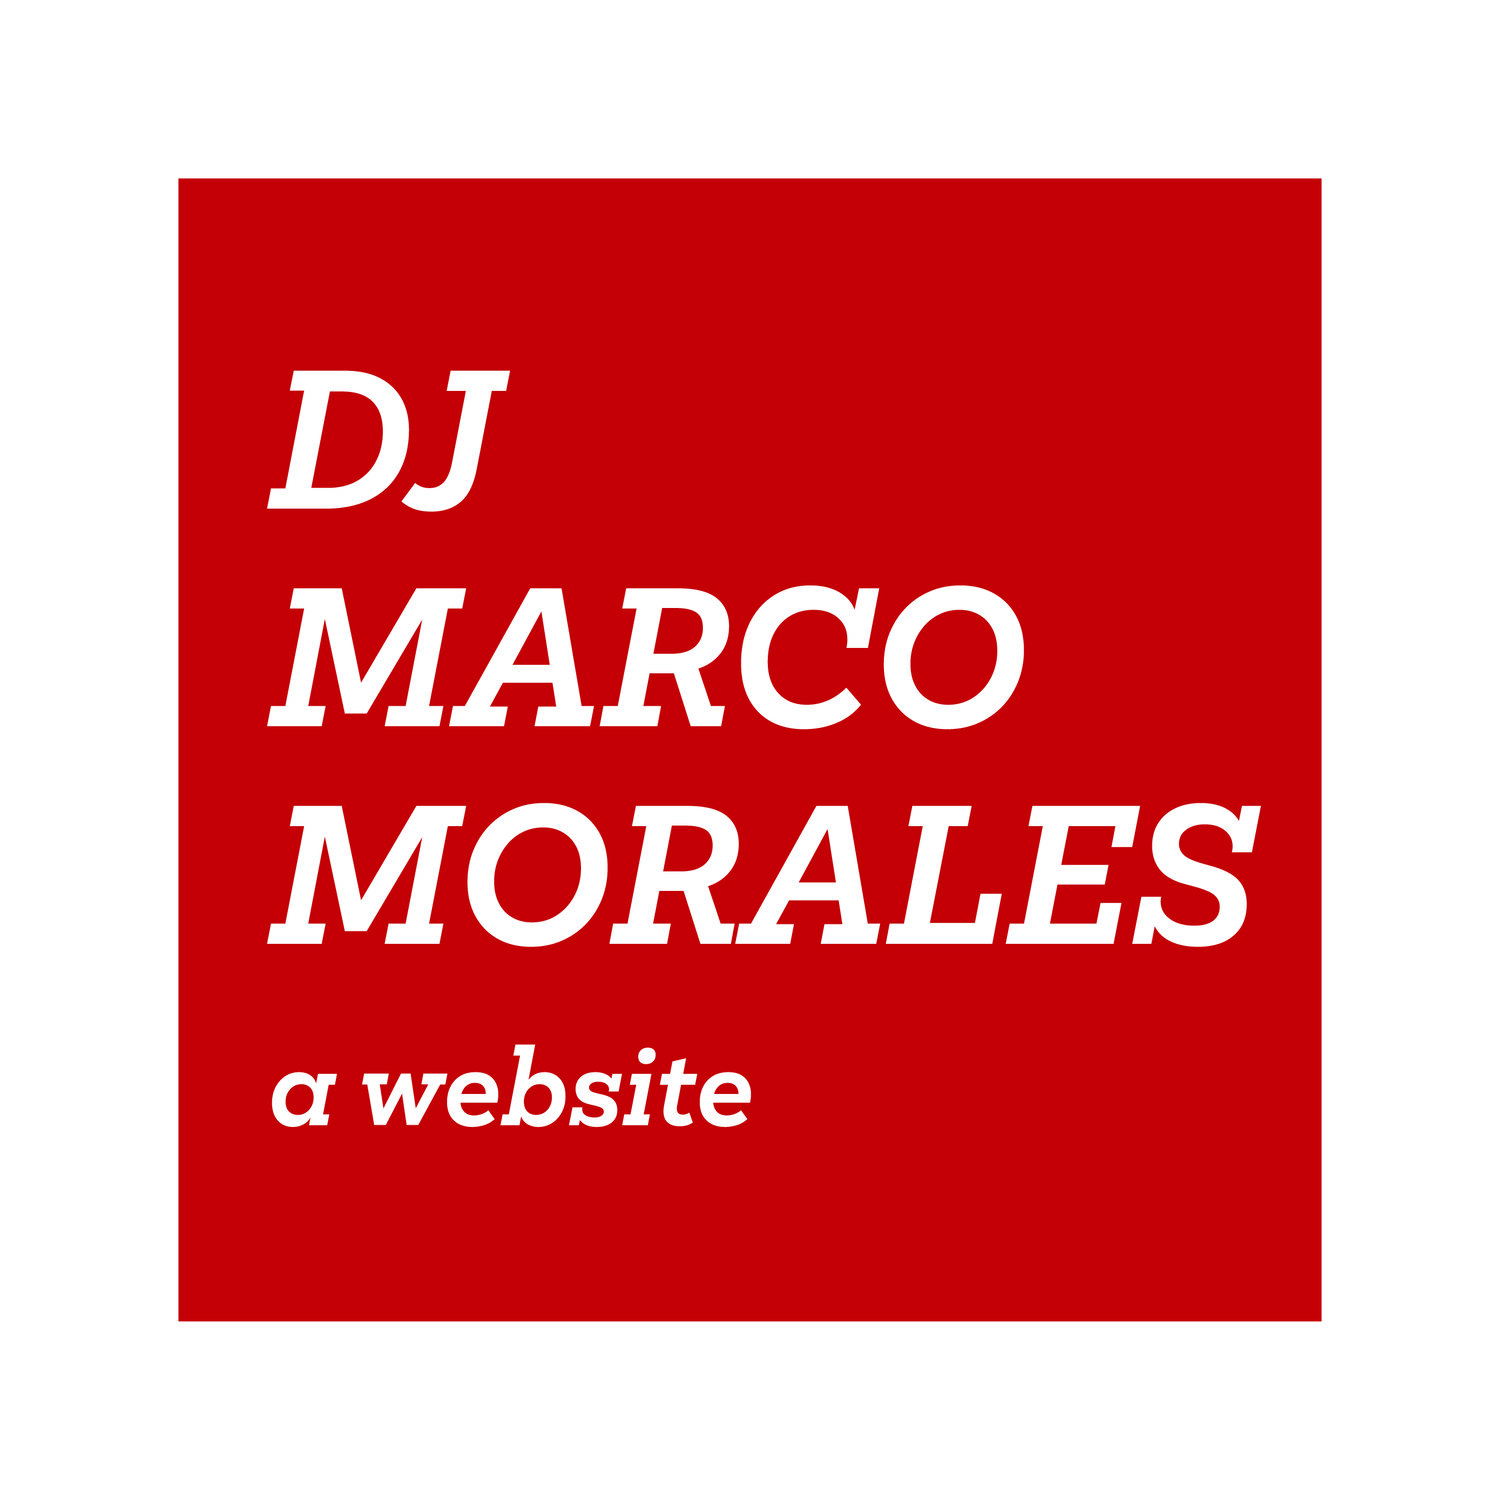 DJ MARCO MORALES